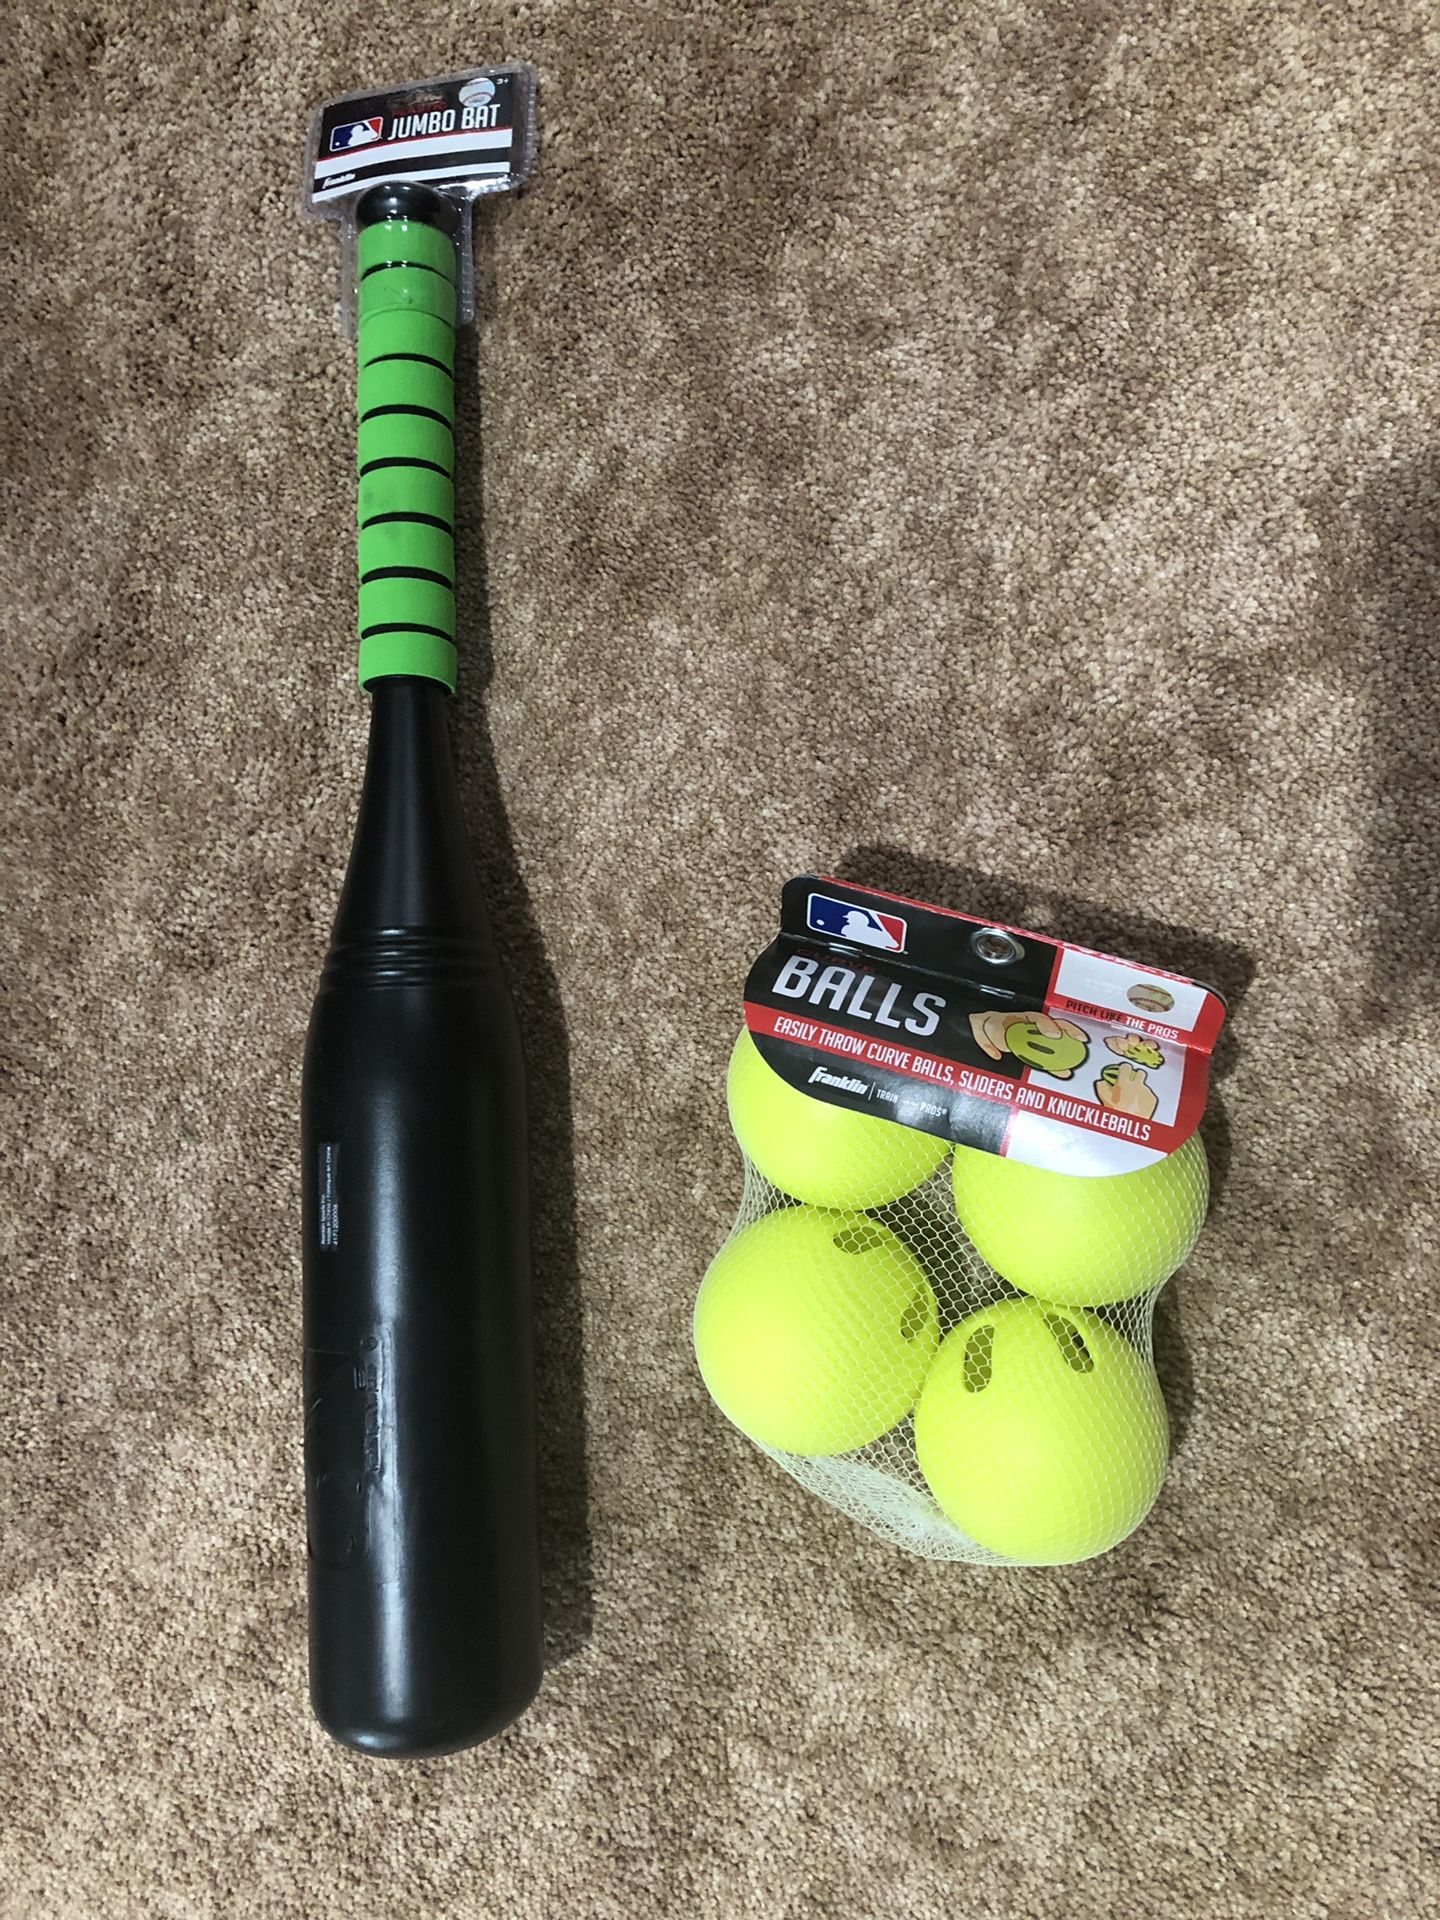 Baseball Bat & Wiffle Balls - brand new